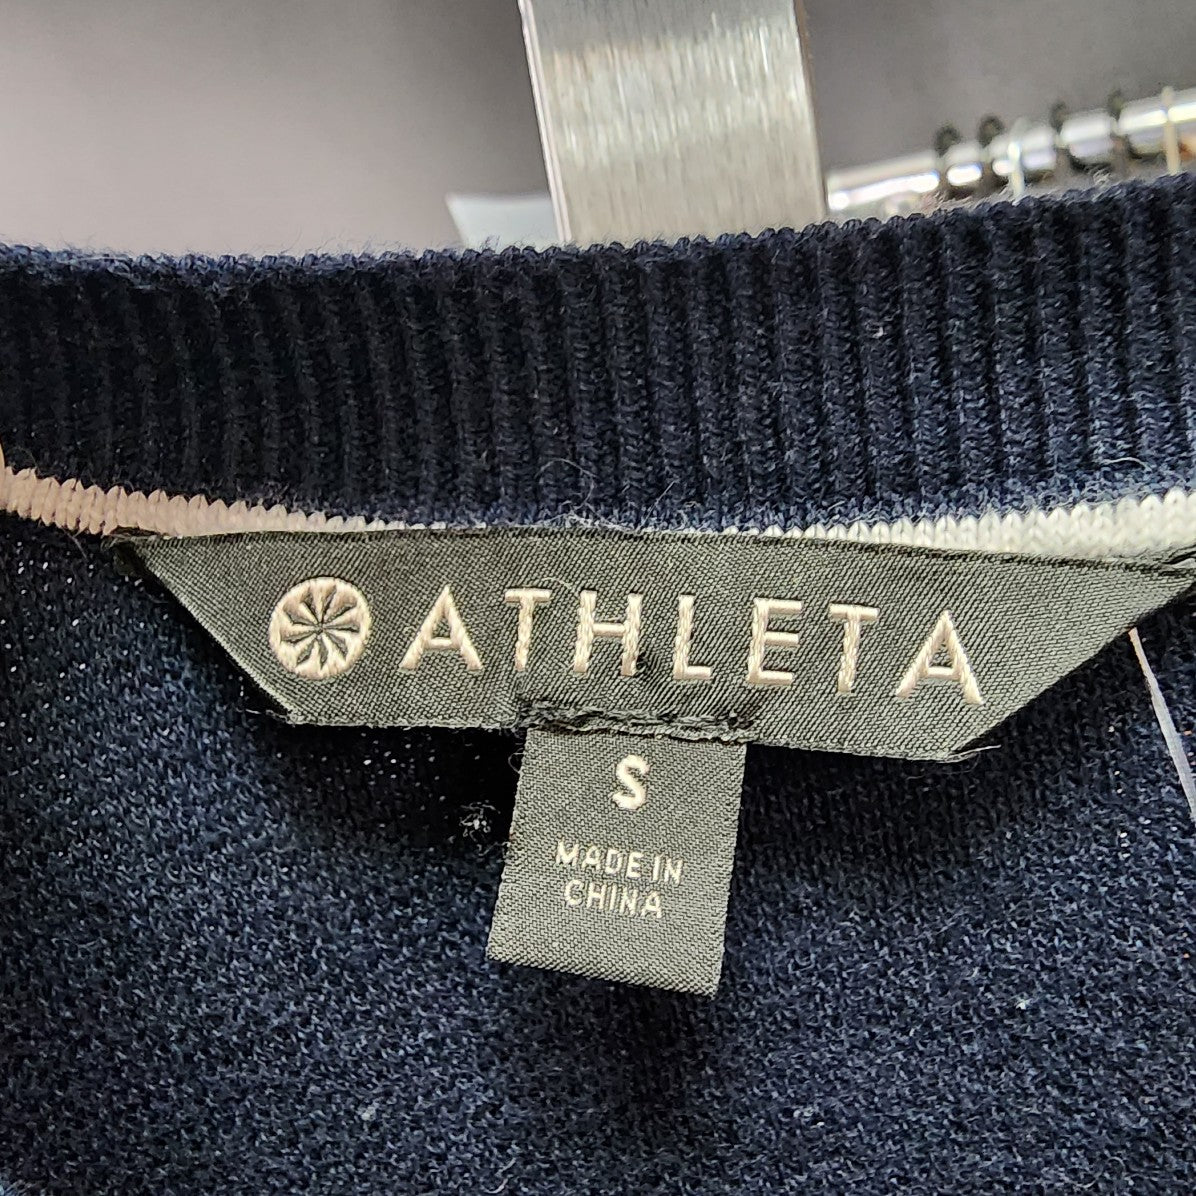 Athleta Navy Blue Cotton Knit Sweater Size S/M